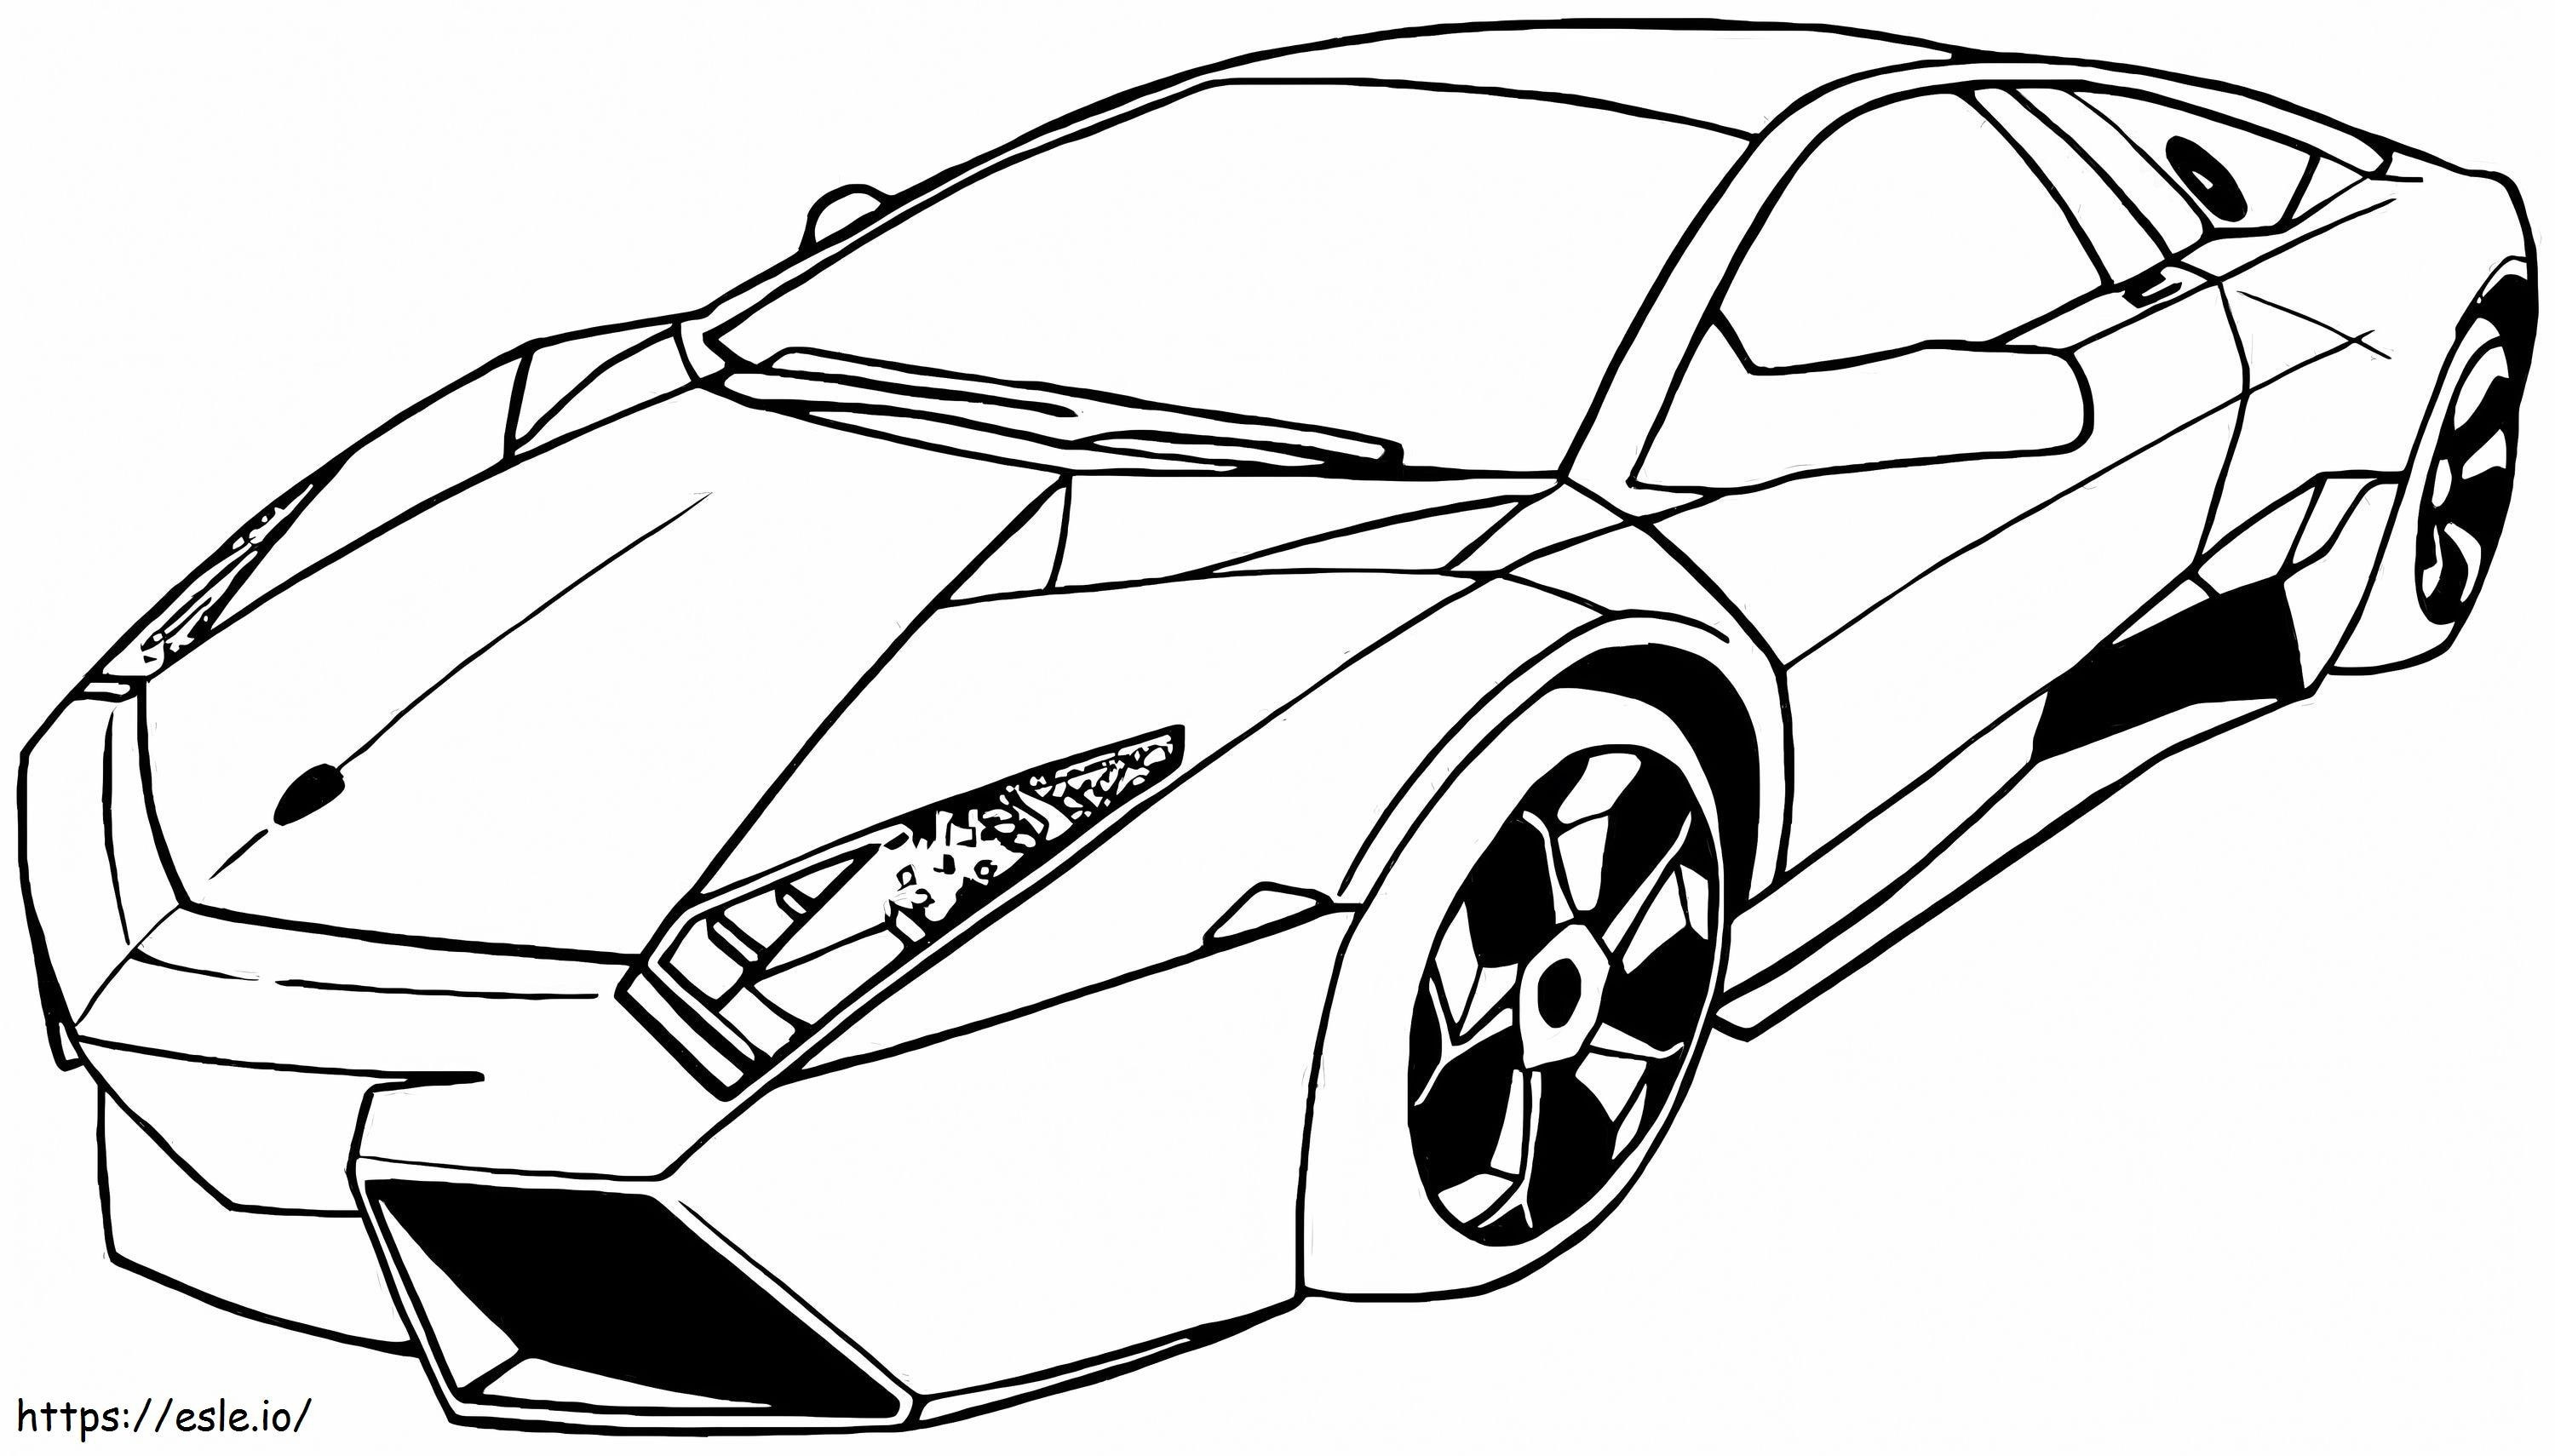 Der große Lamborghini ausmalbilder